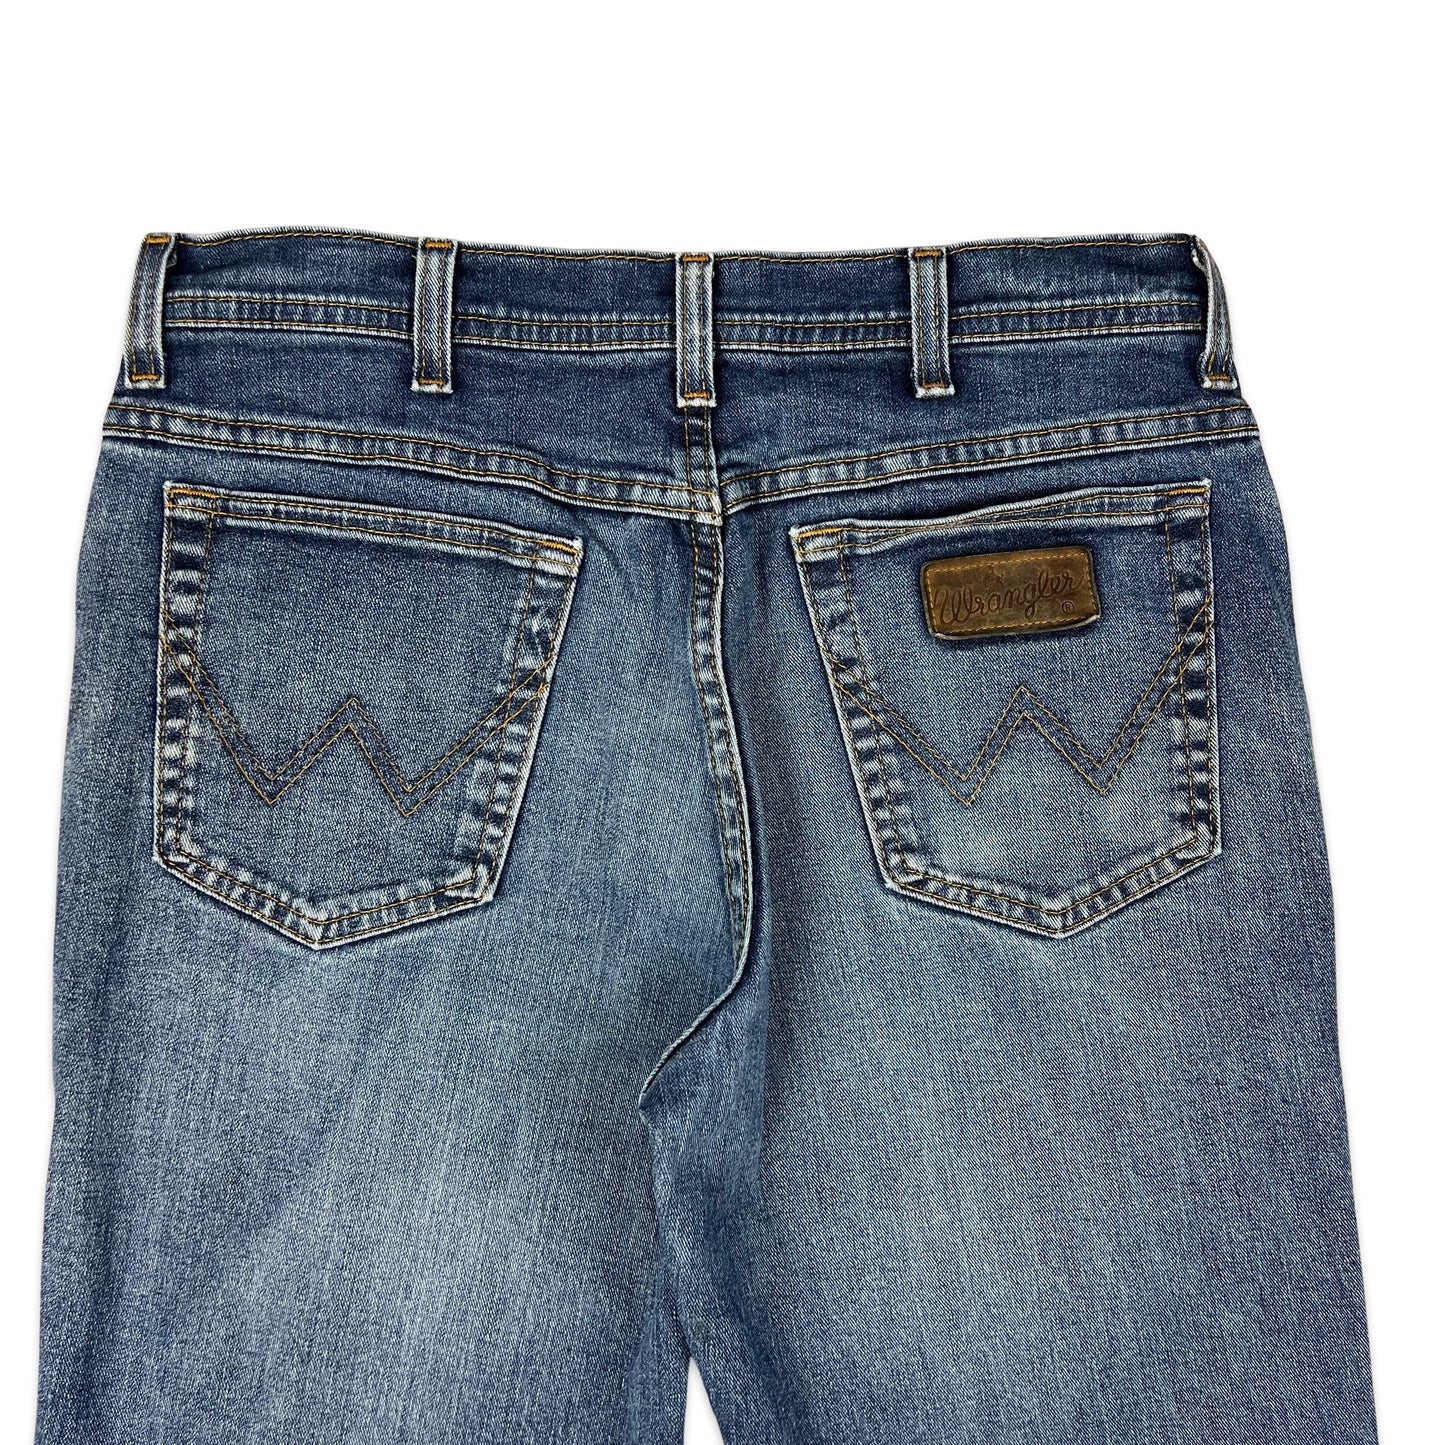 Vintage Wrangler Kick Flare Jeans Blue W32 L27